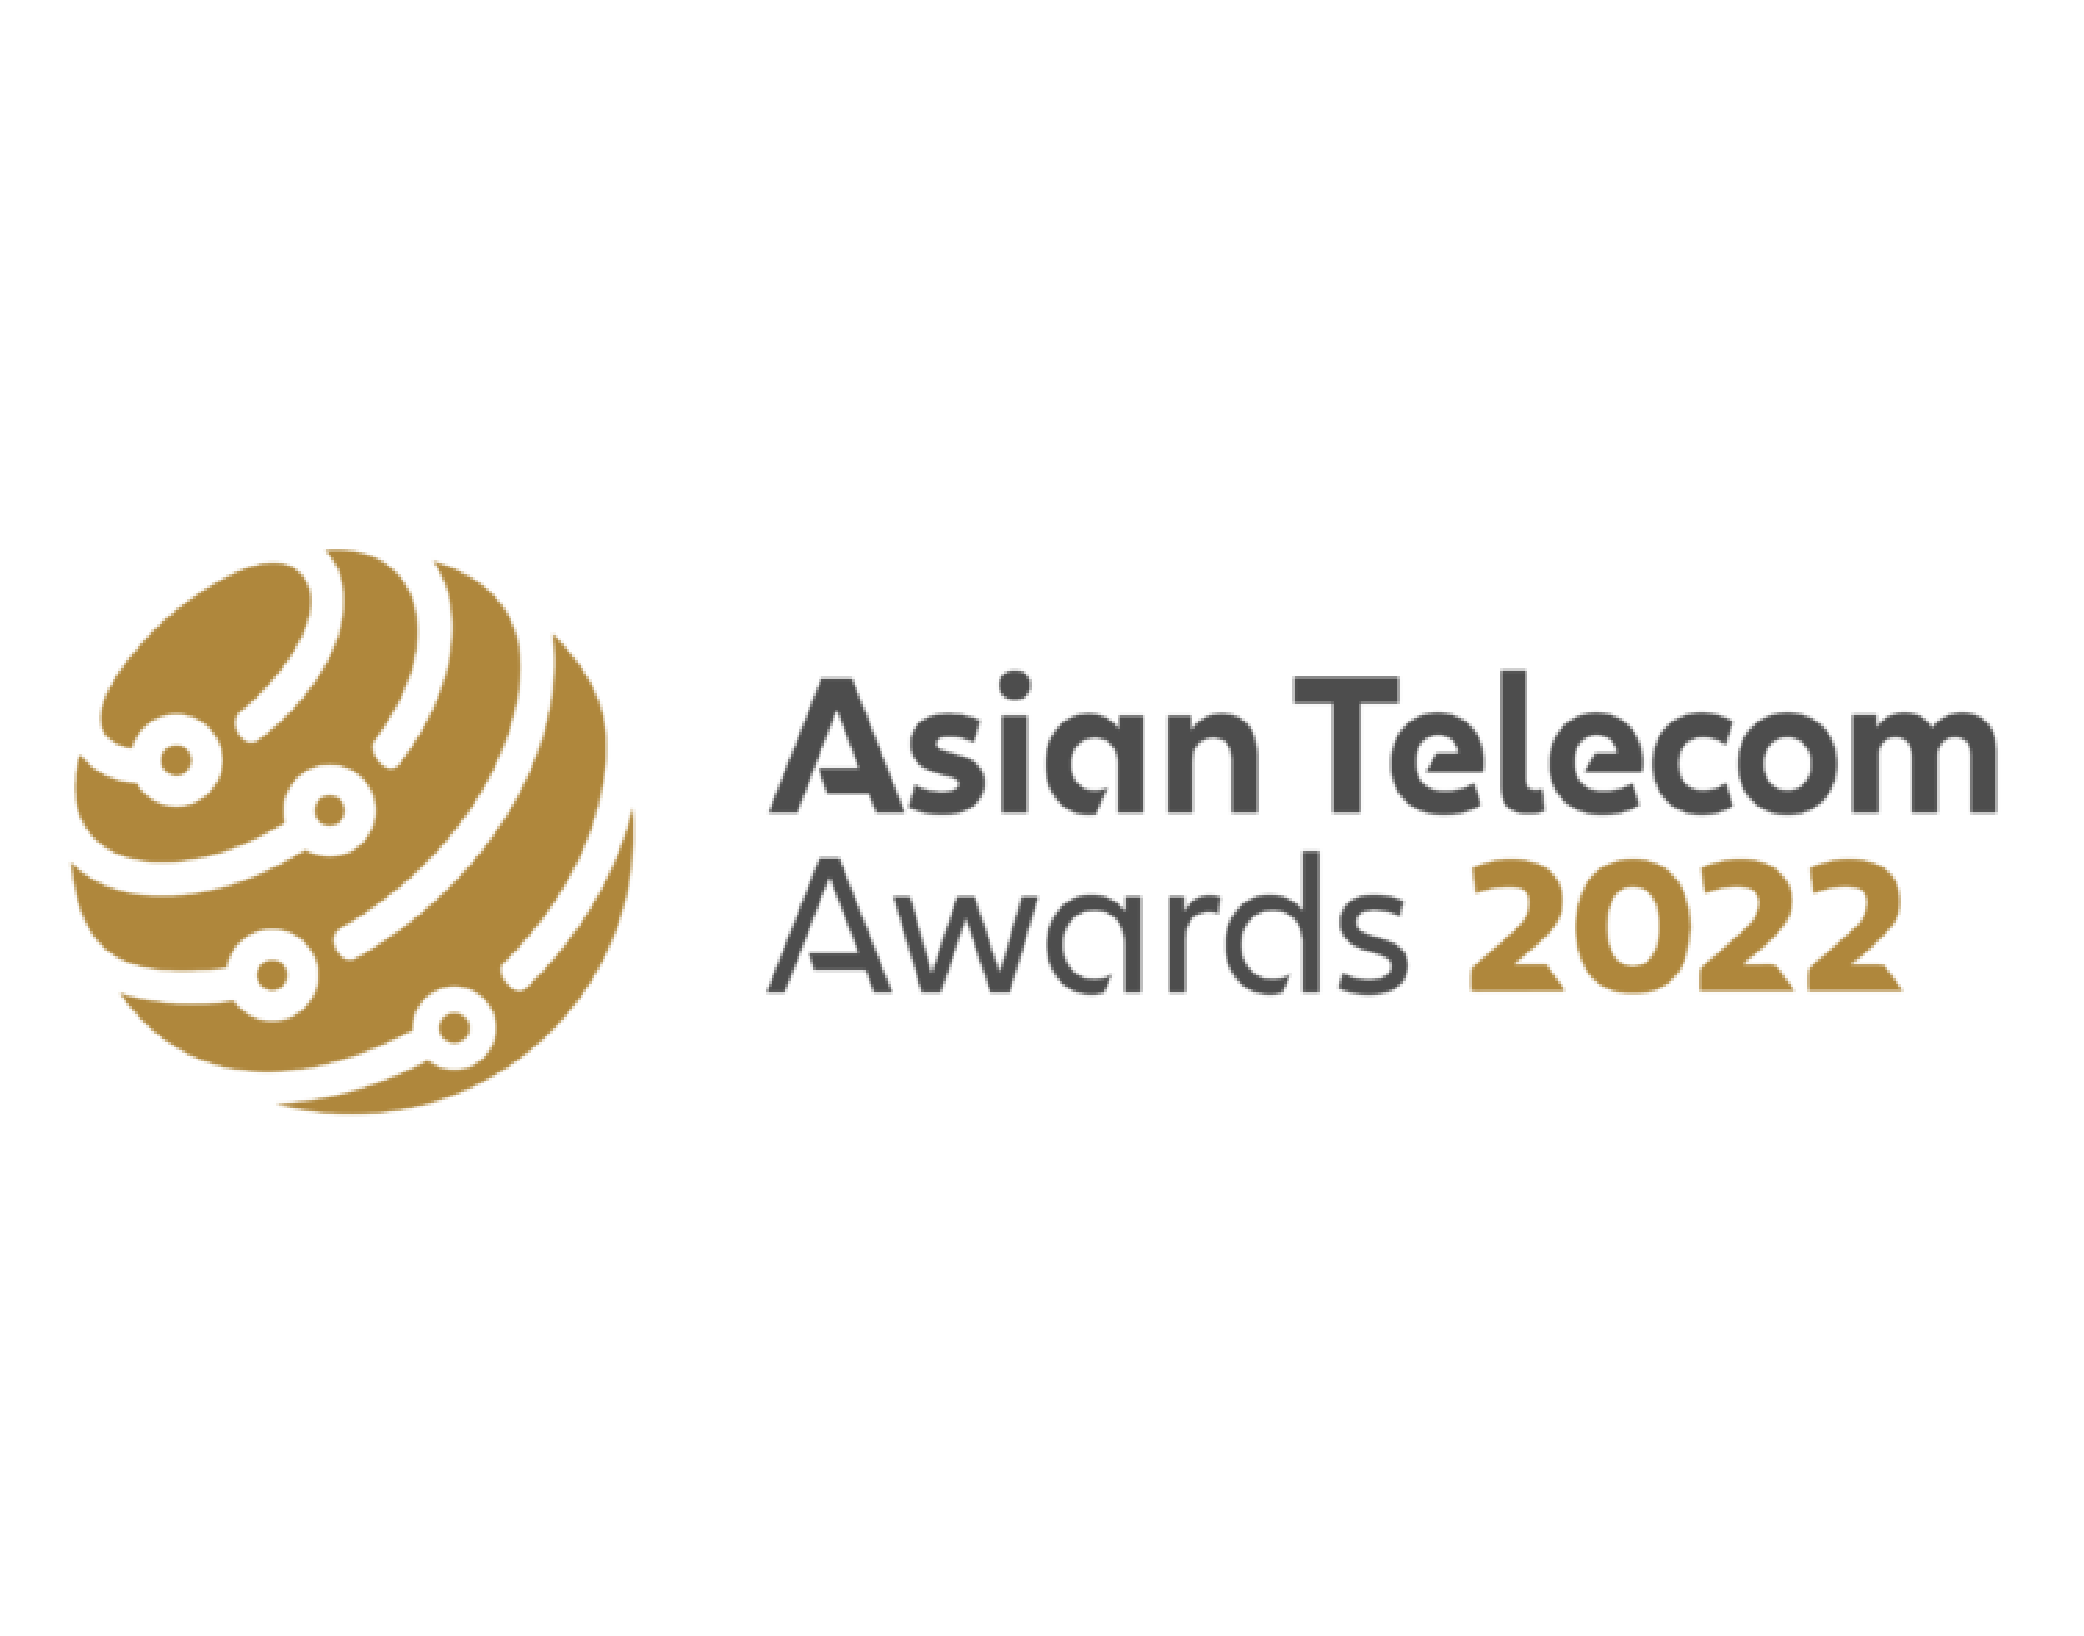 Asian Telecom Award 2022